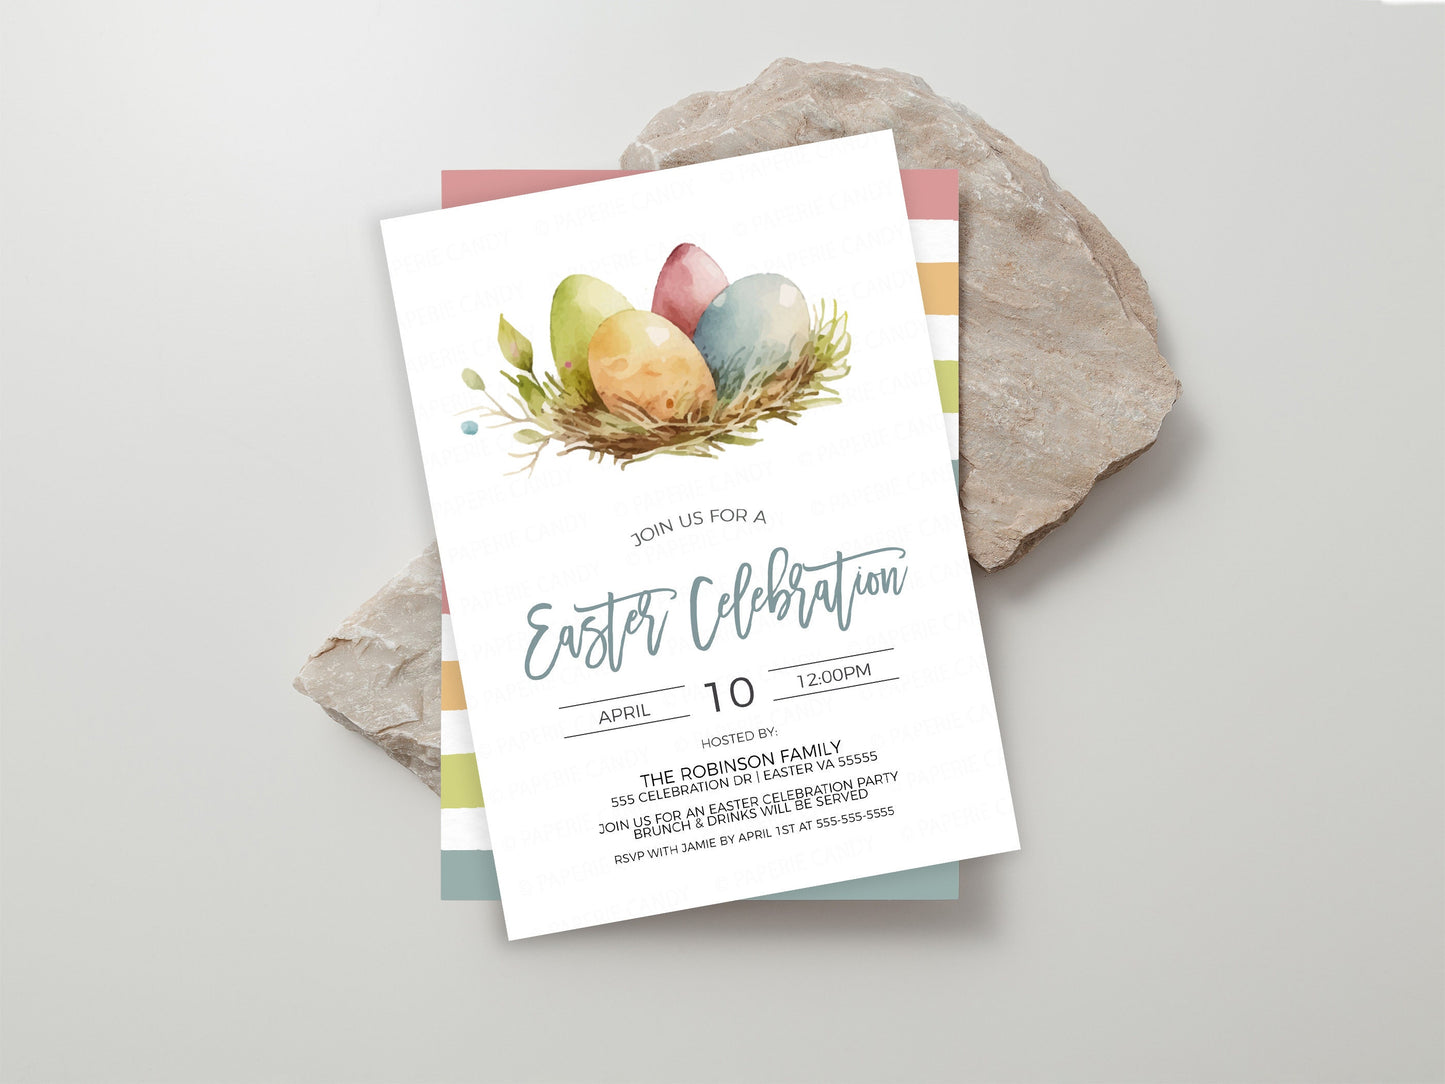 Easter Celebration Invitation, Easter Party Invite, Breakfast Brunch Lunch Dinner Party, Good Friday Event, Egg Hunt, Editable Printable